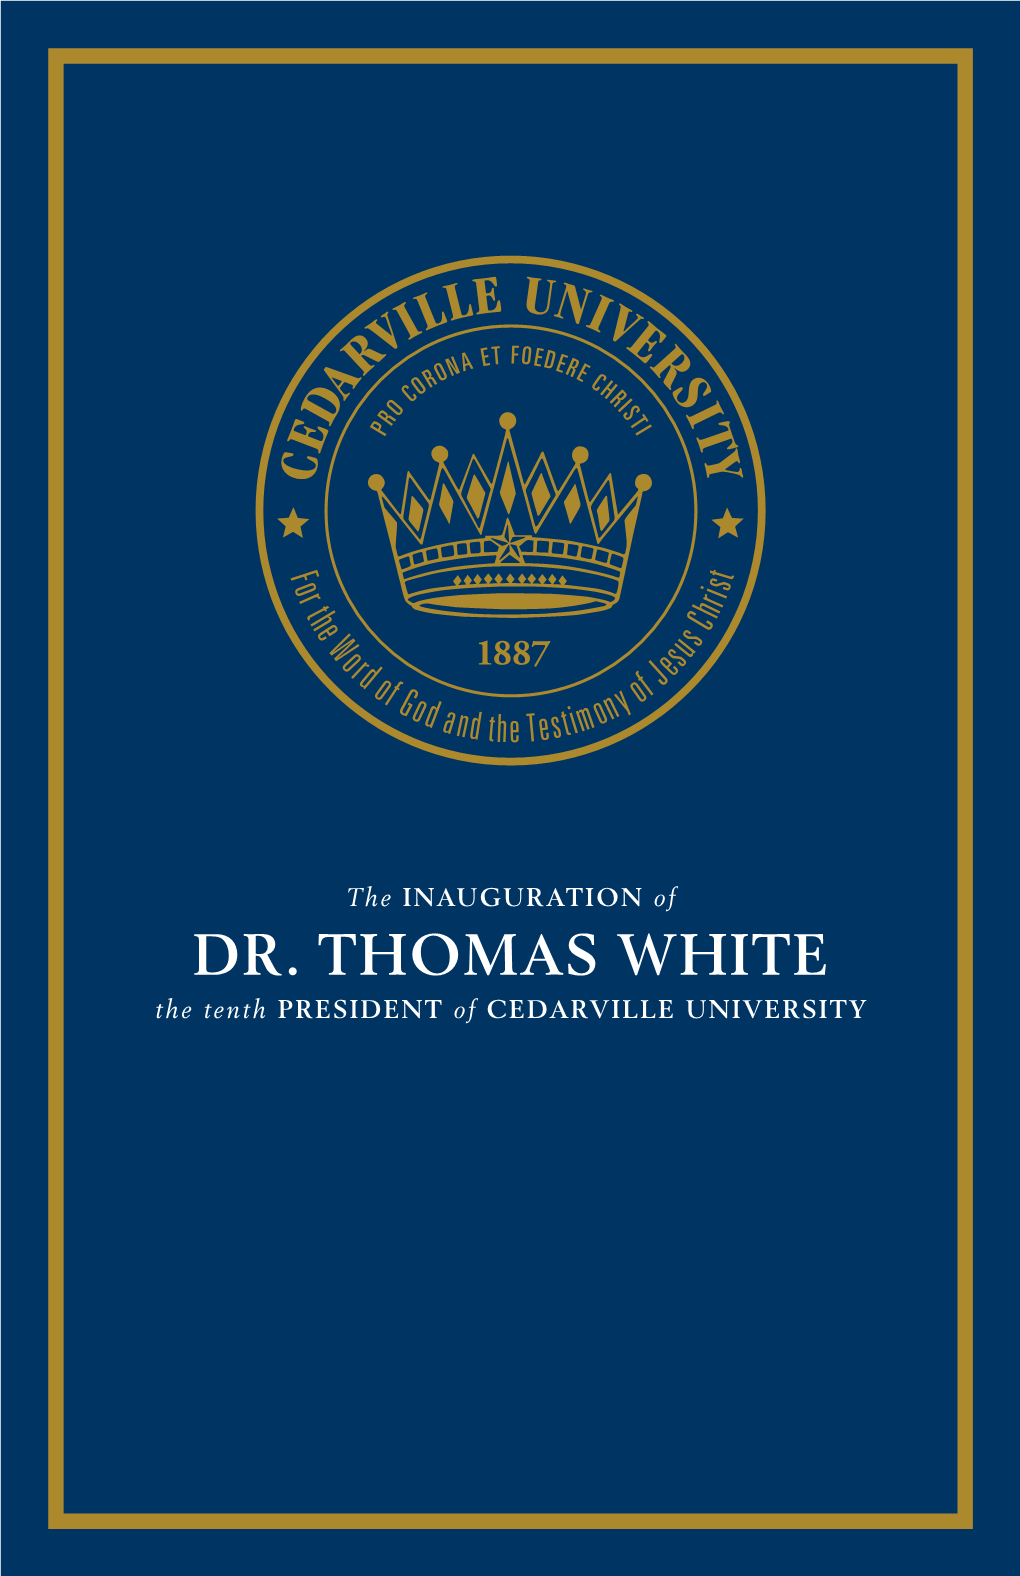 DR. THOMAS WHITE the Tenth PRESIDENT of CEDARVILLE UNIVERSITY